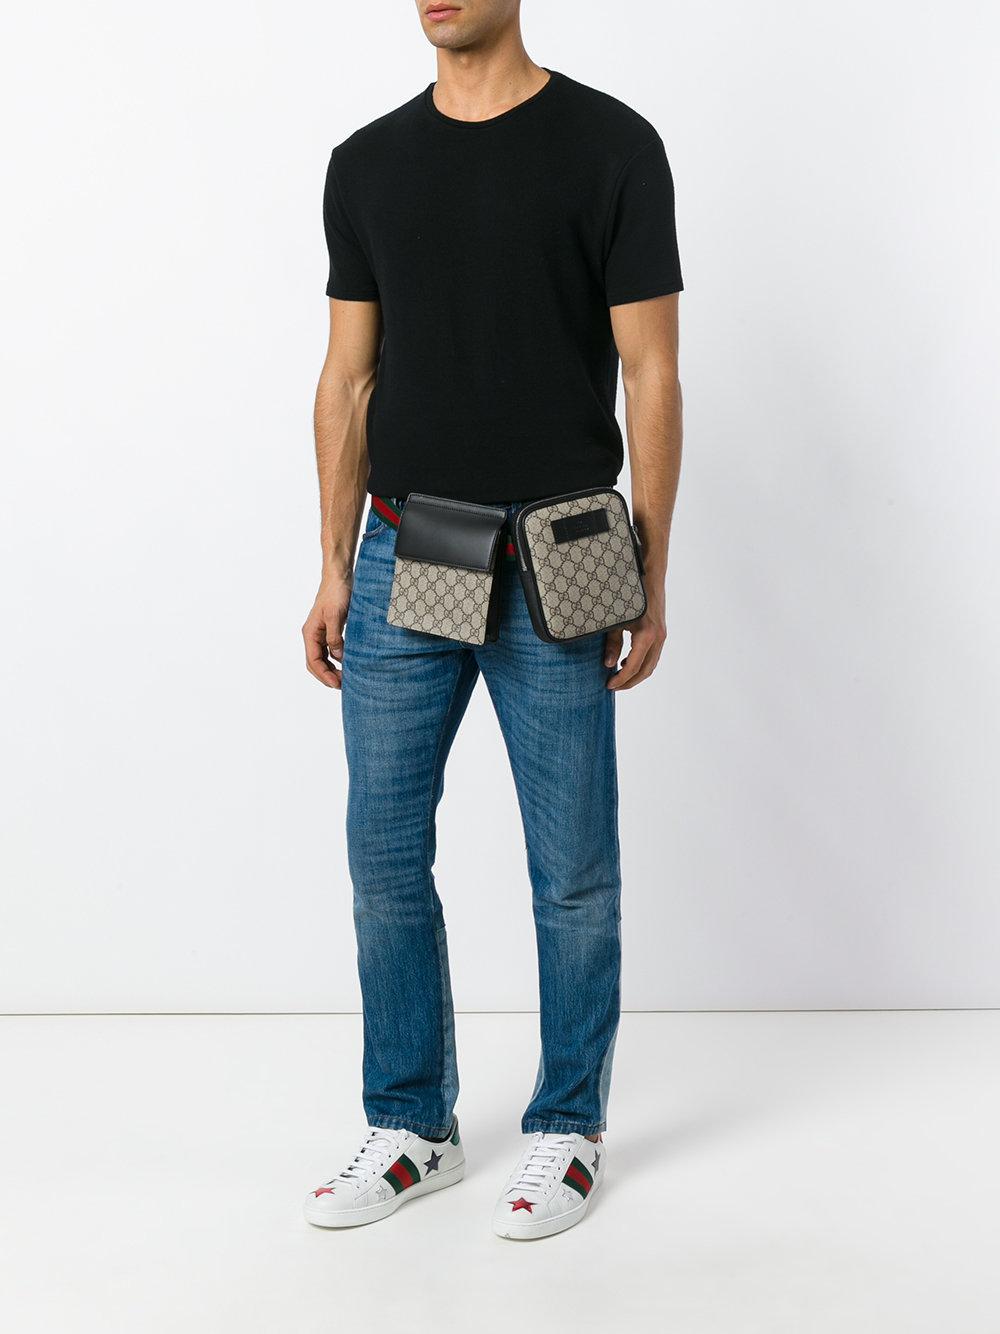 gucci double belt bag, OFF 73%,www 